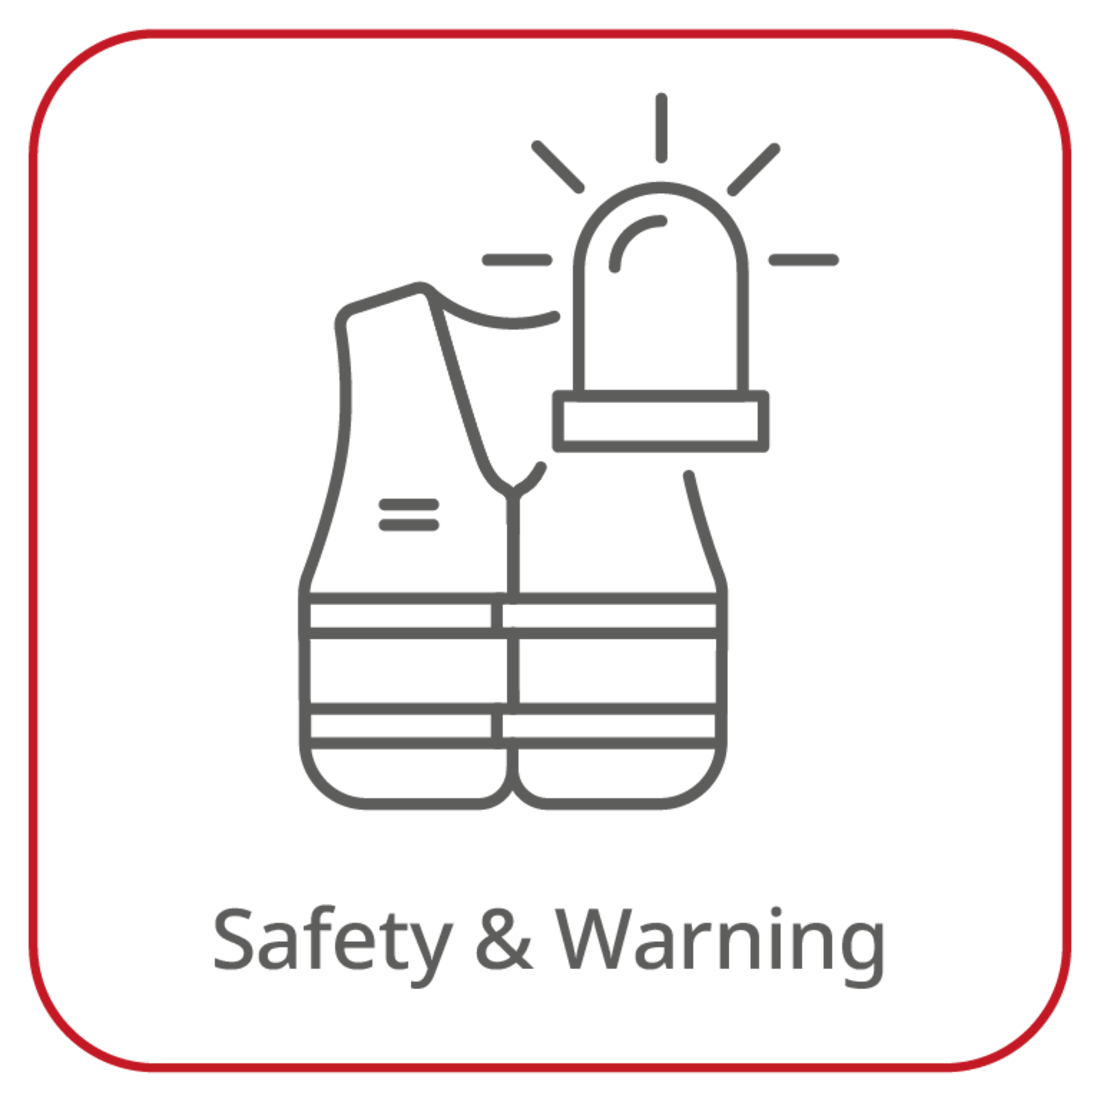 Safety & Warning